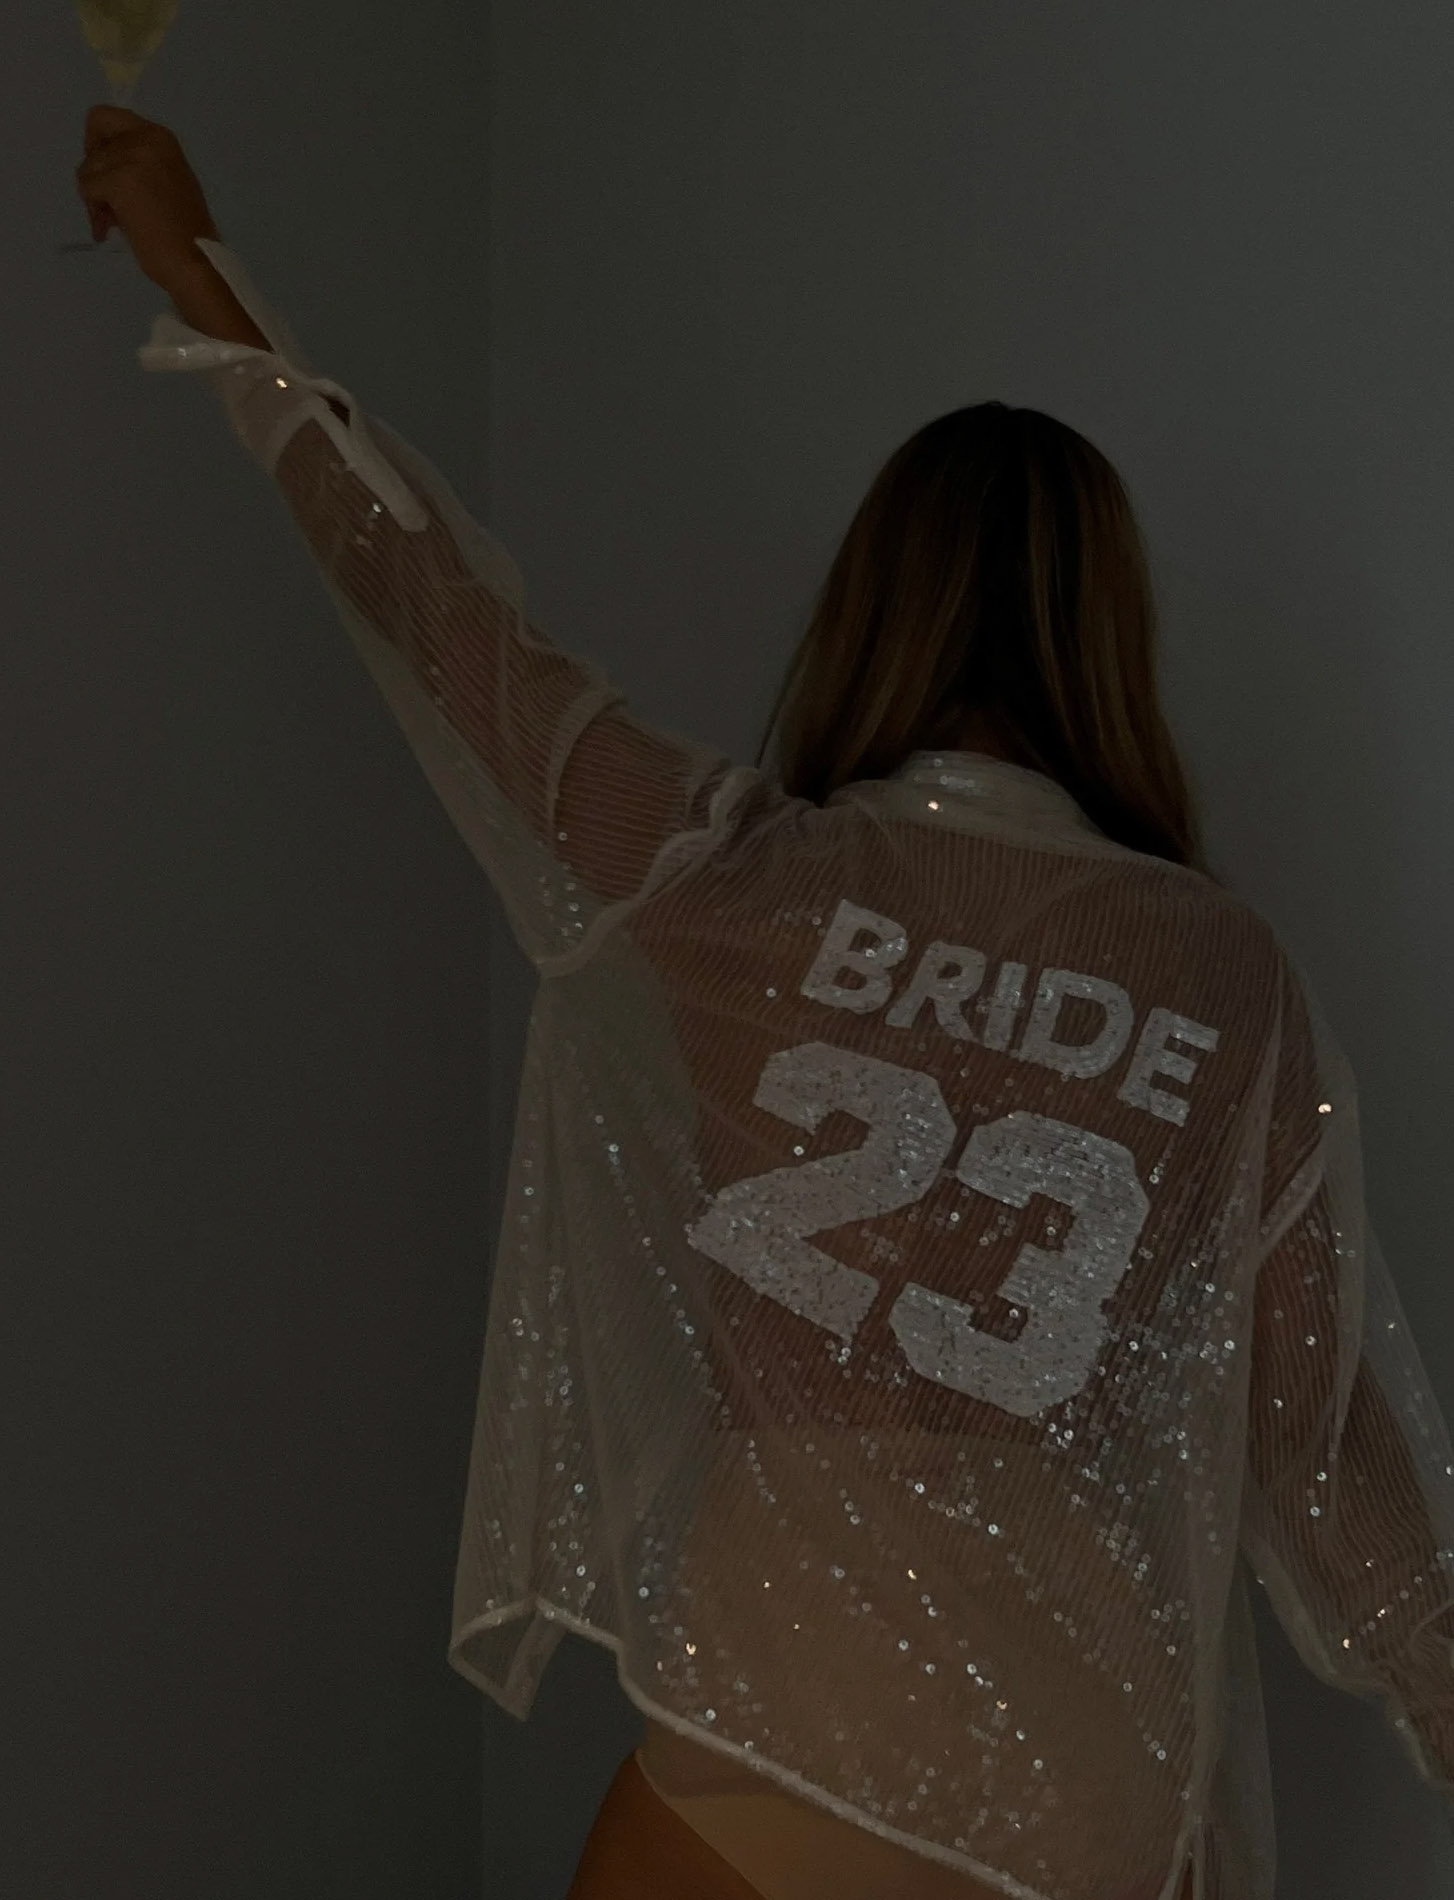 bridal sequin shirt bride 23 chosen by kyha